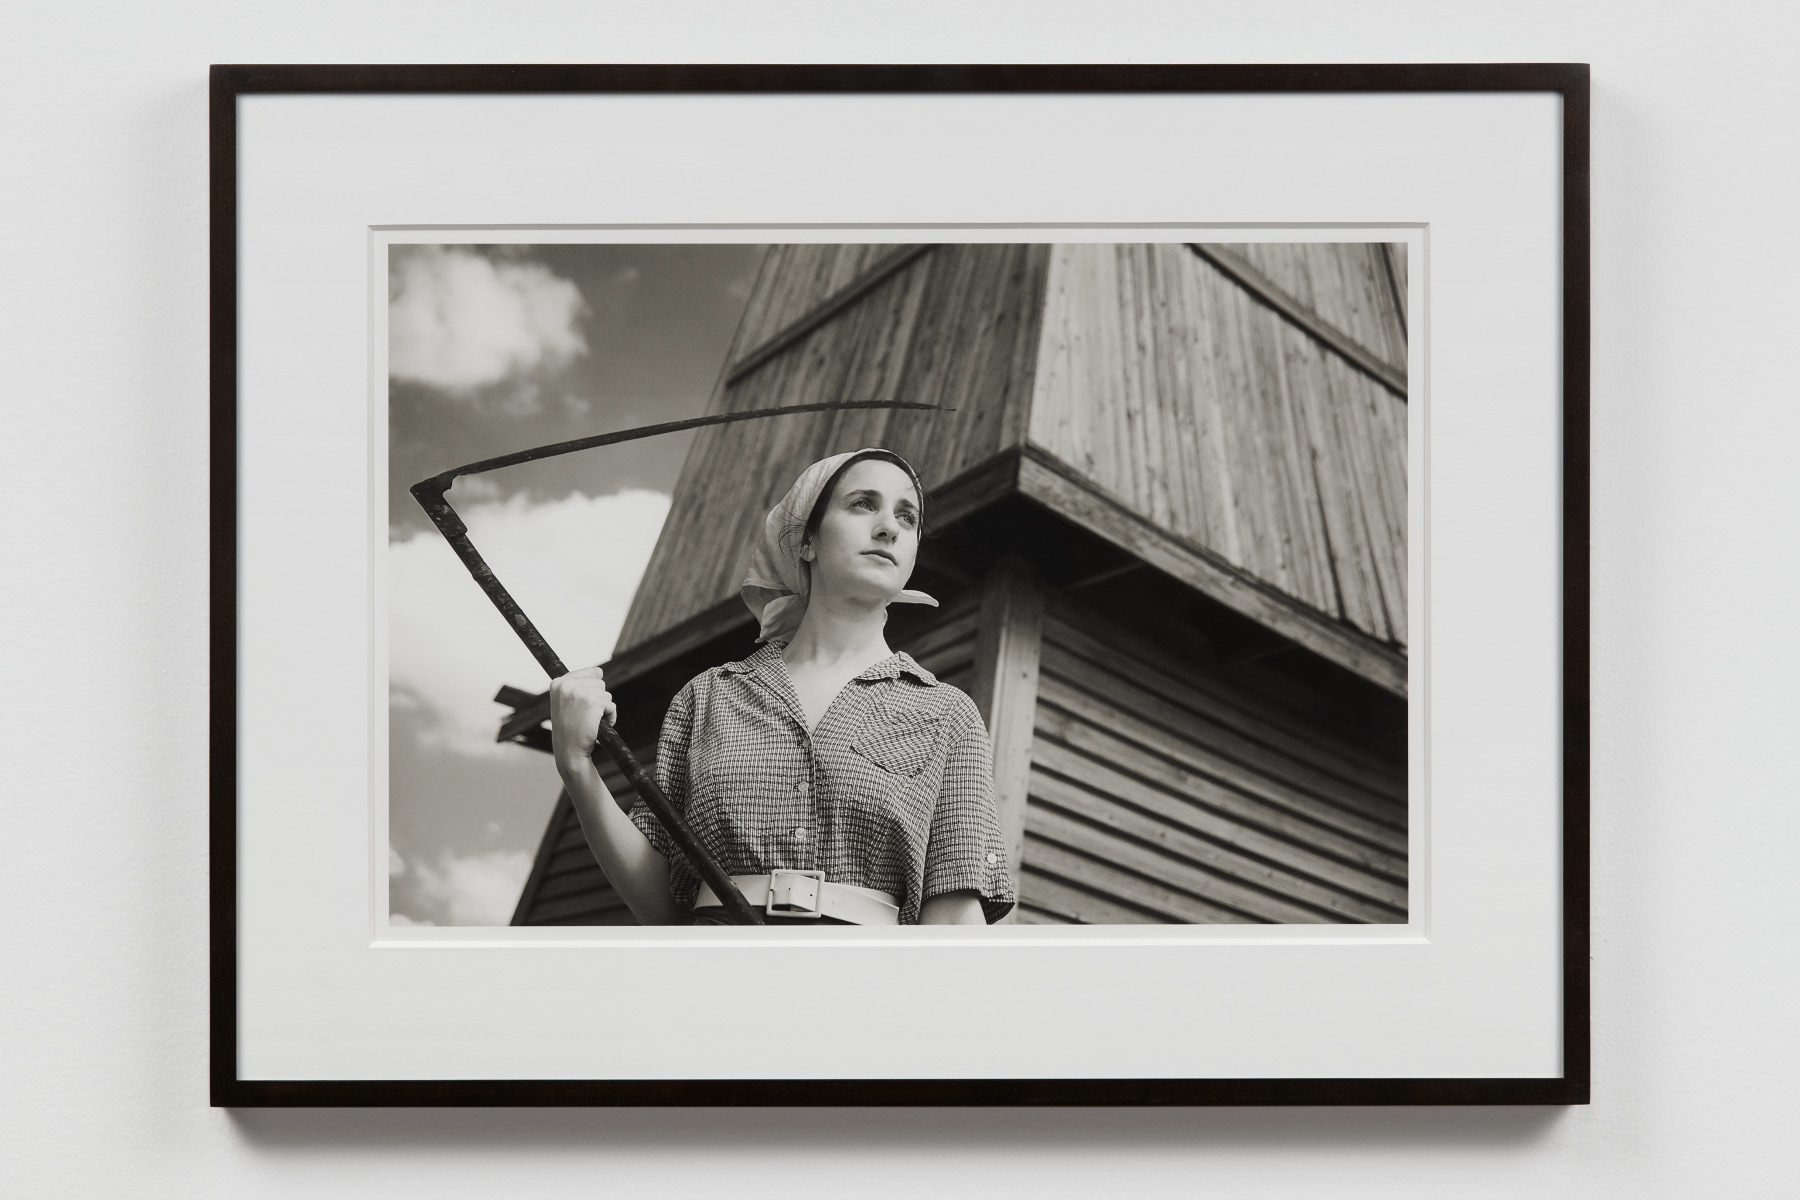 grayscale photograph of a woman holding a scythe